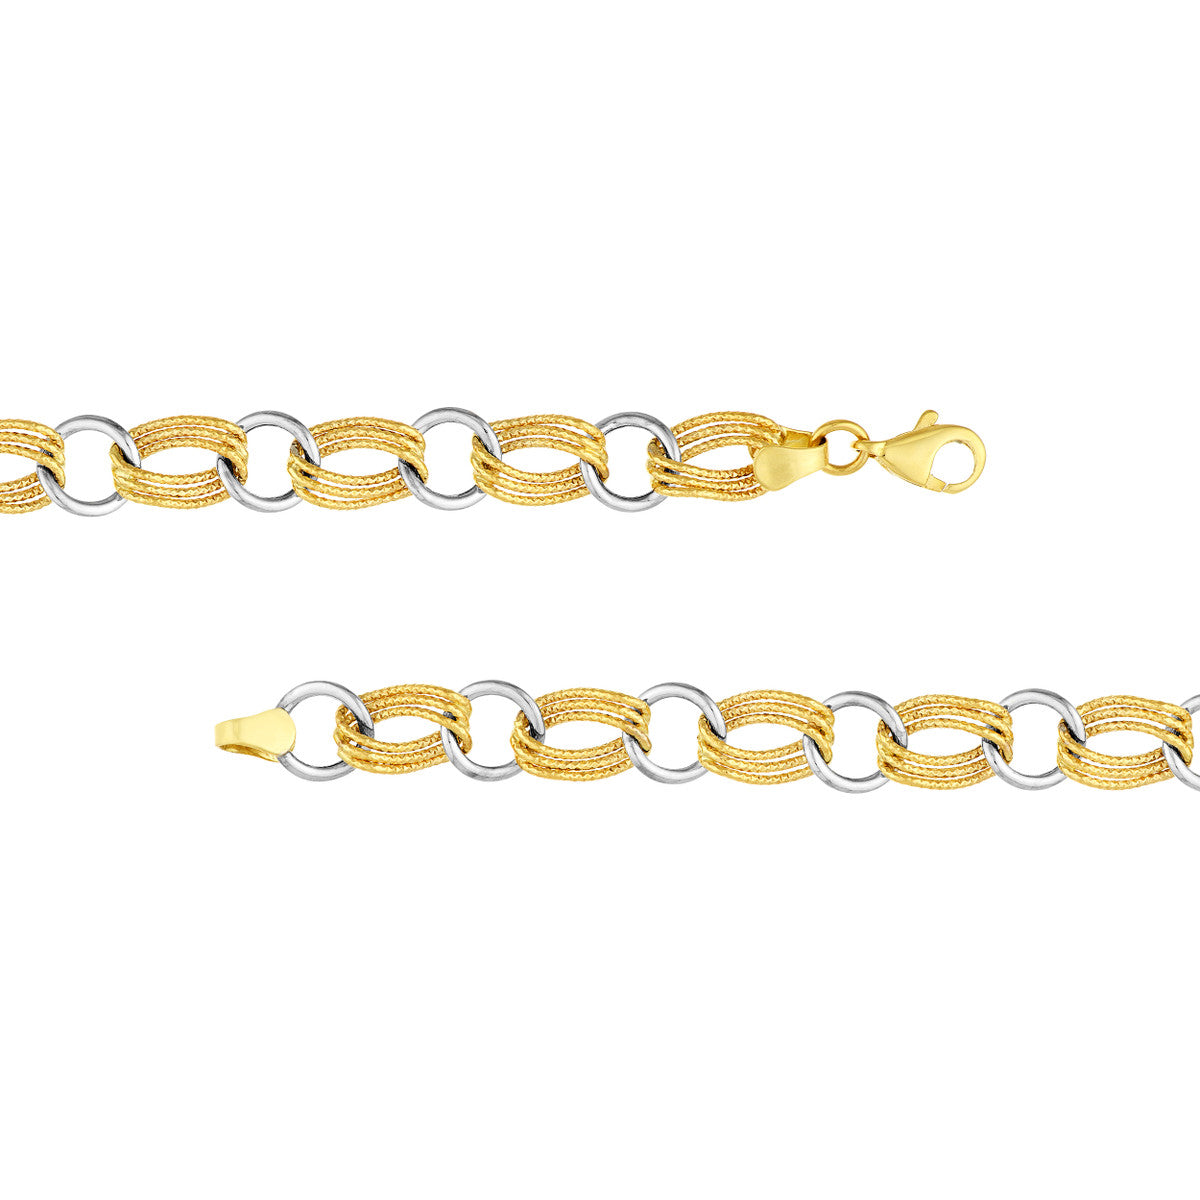 Two-Tone Textured Triple and Plain Link Bracelet